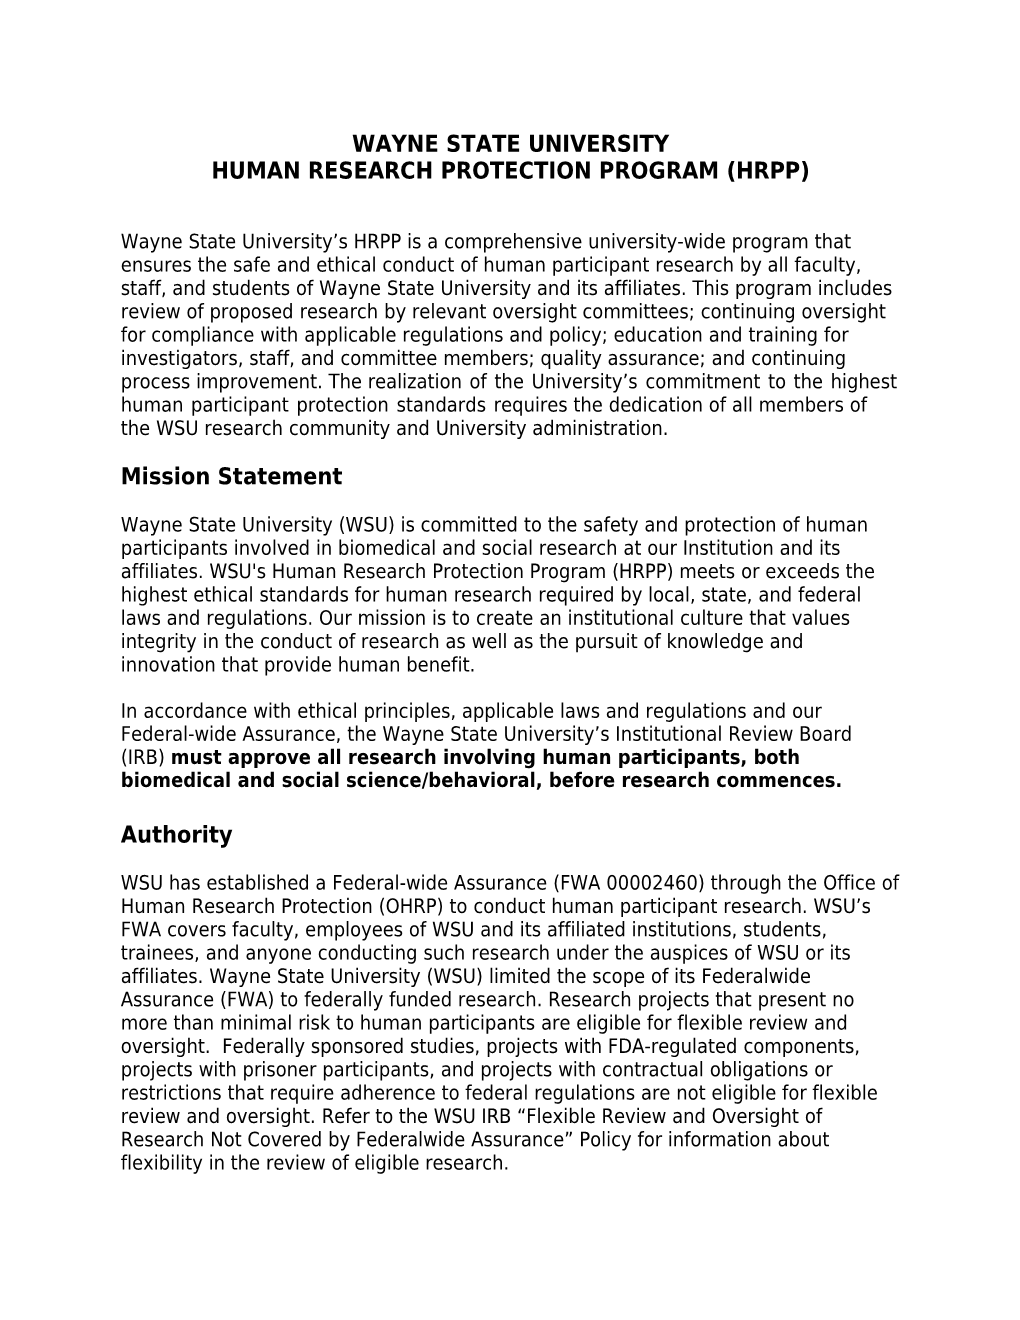 Human Research Protection Program (Hrpp)